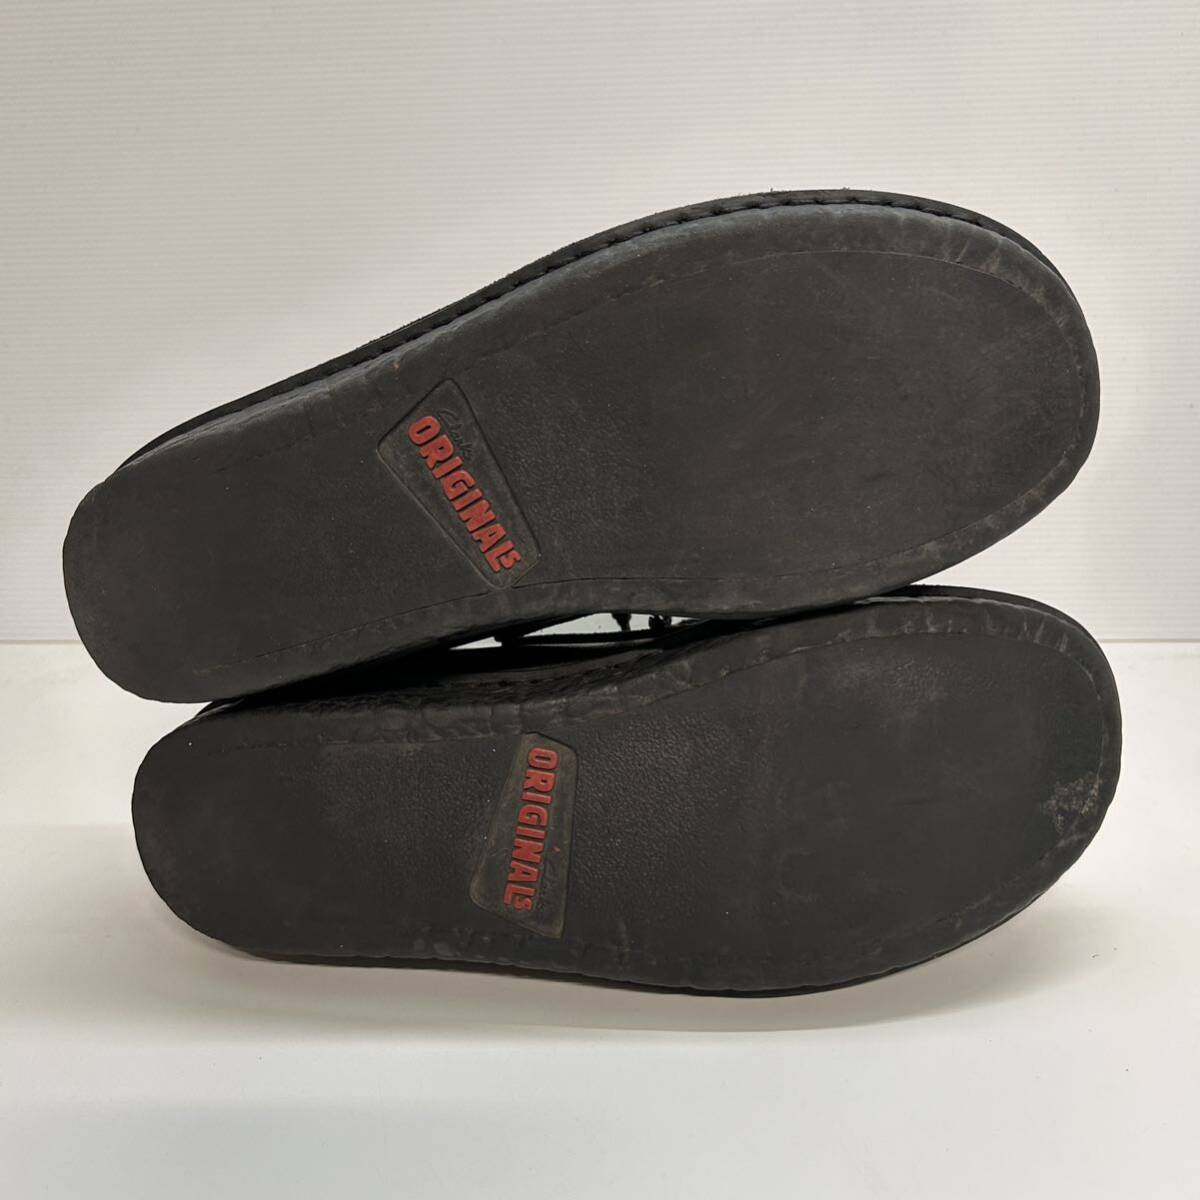 C942 clarks Clarks originals men's walking shoes UK7.5G approximately 25.5cm black leather original leather 